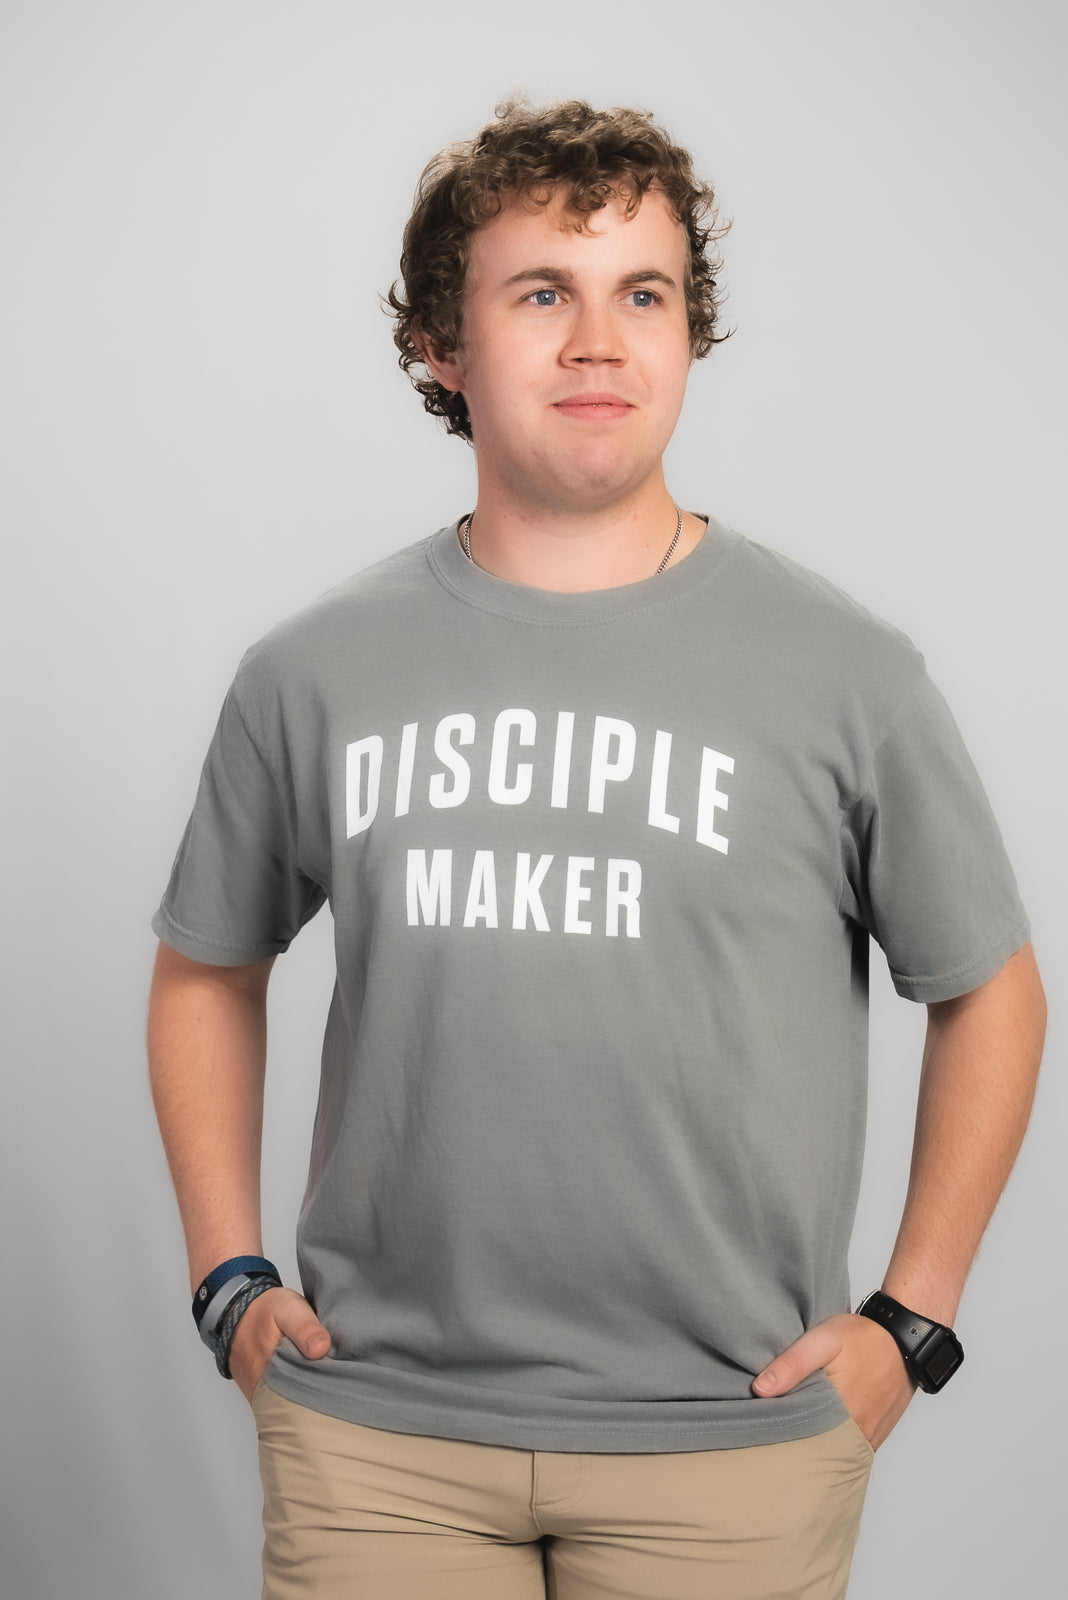 Disciple Maker Dark Tee